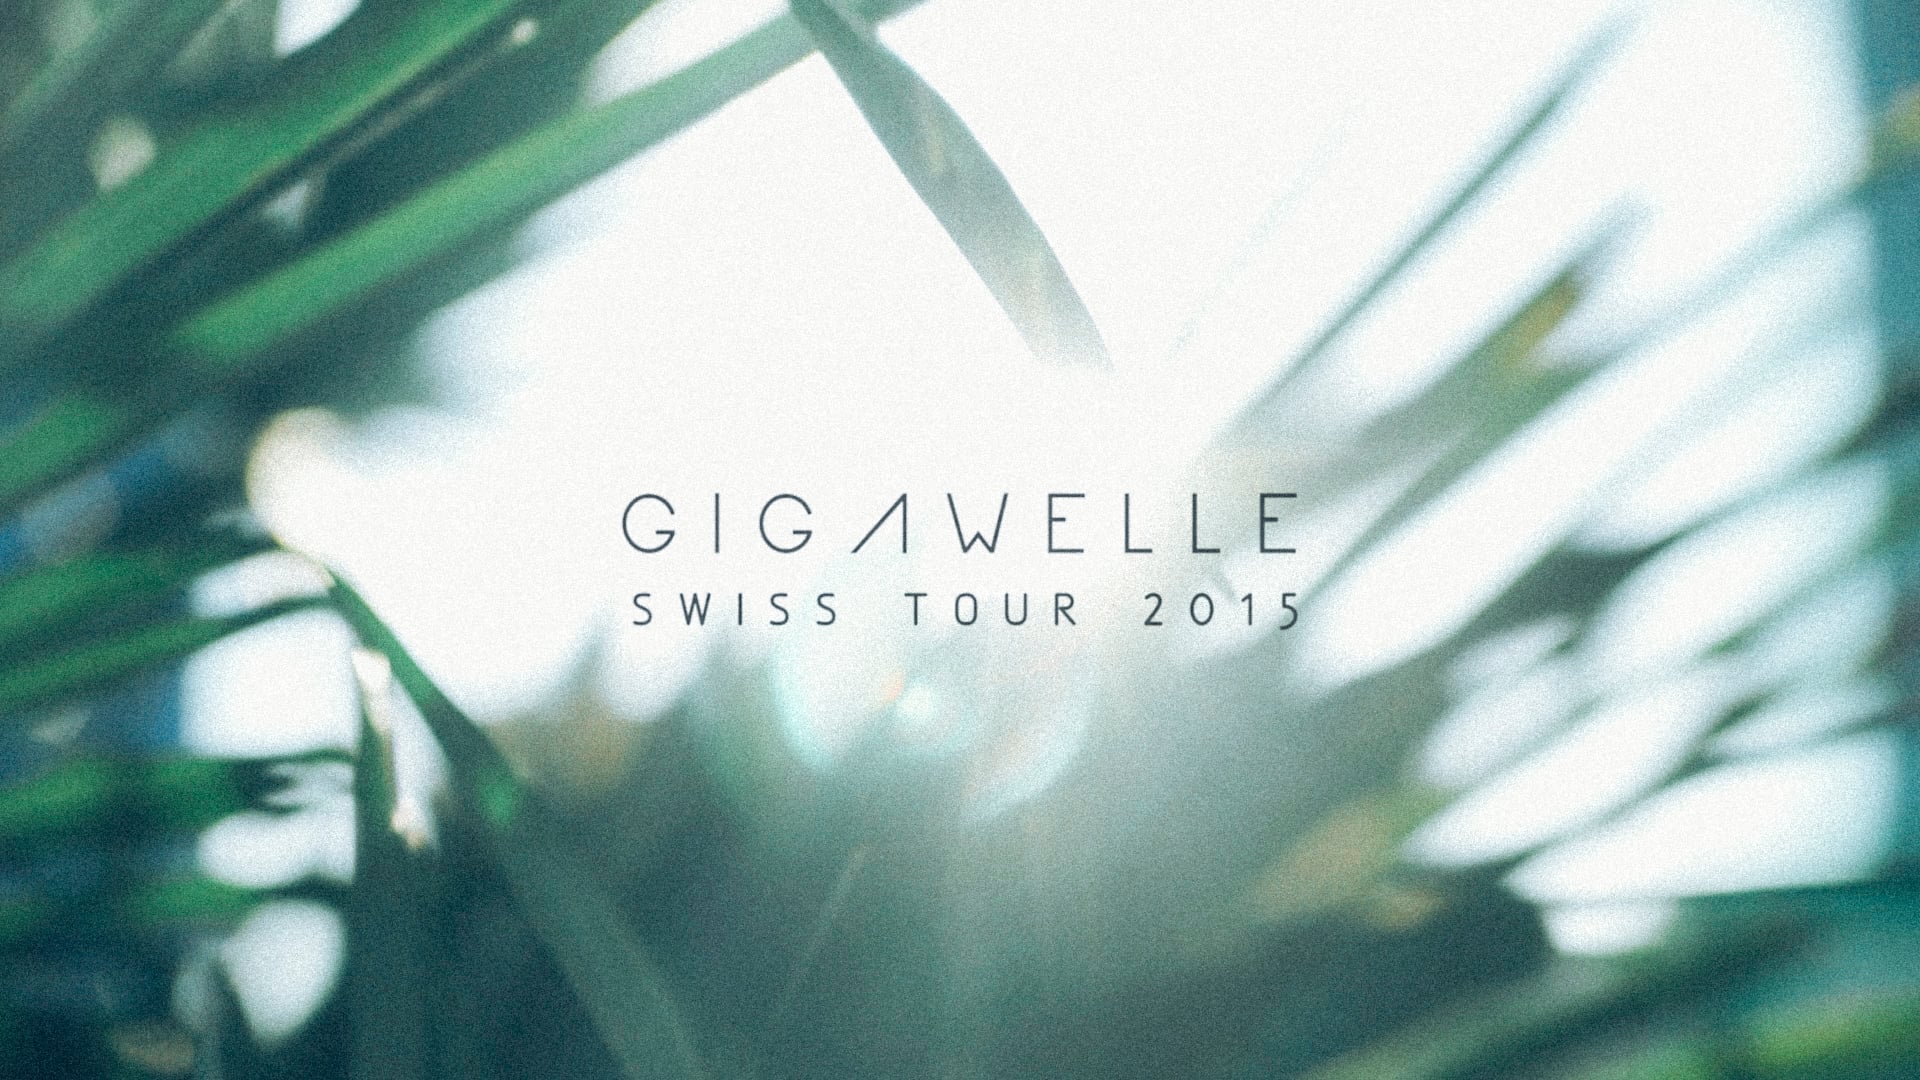 GIGAWELLE SWISS TOUR 2015